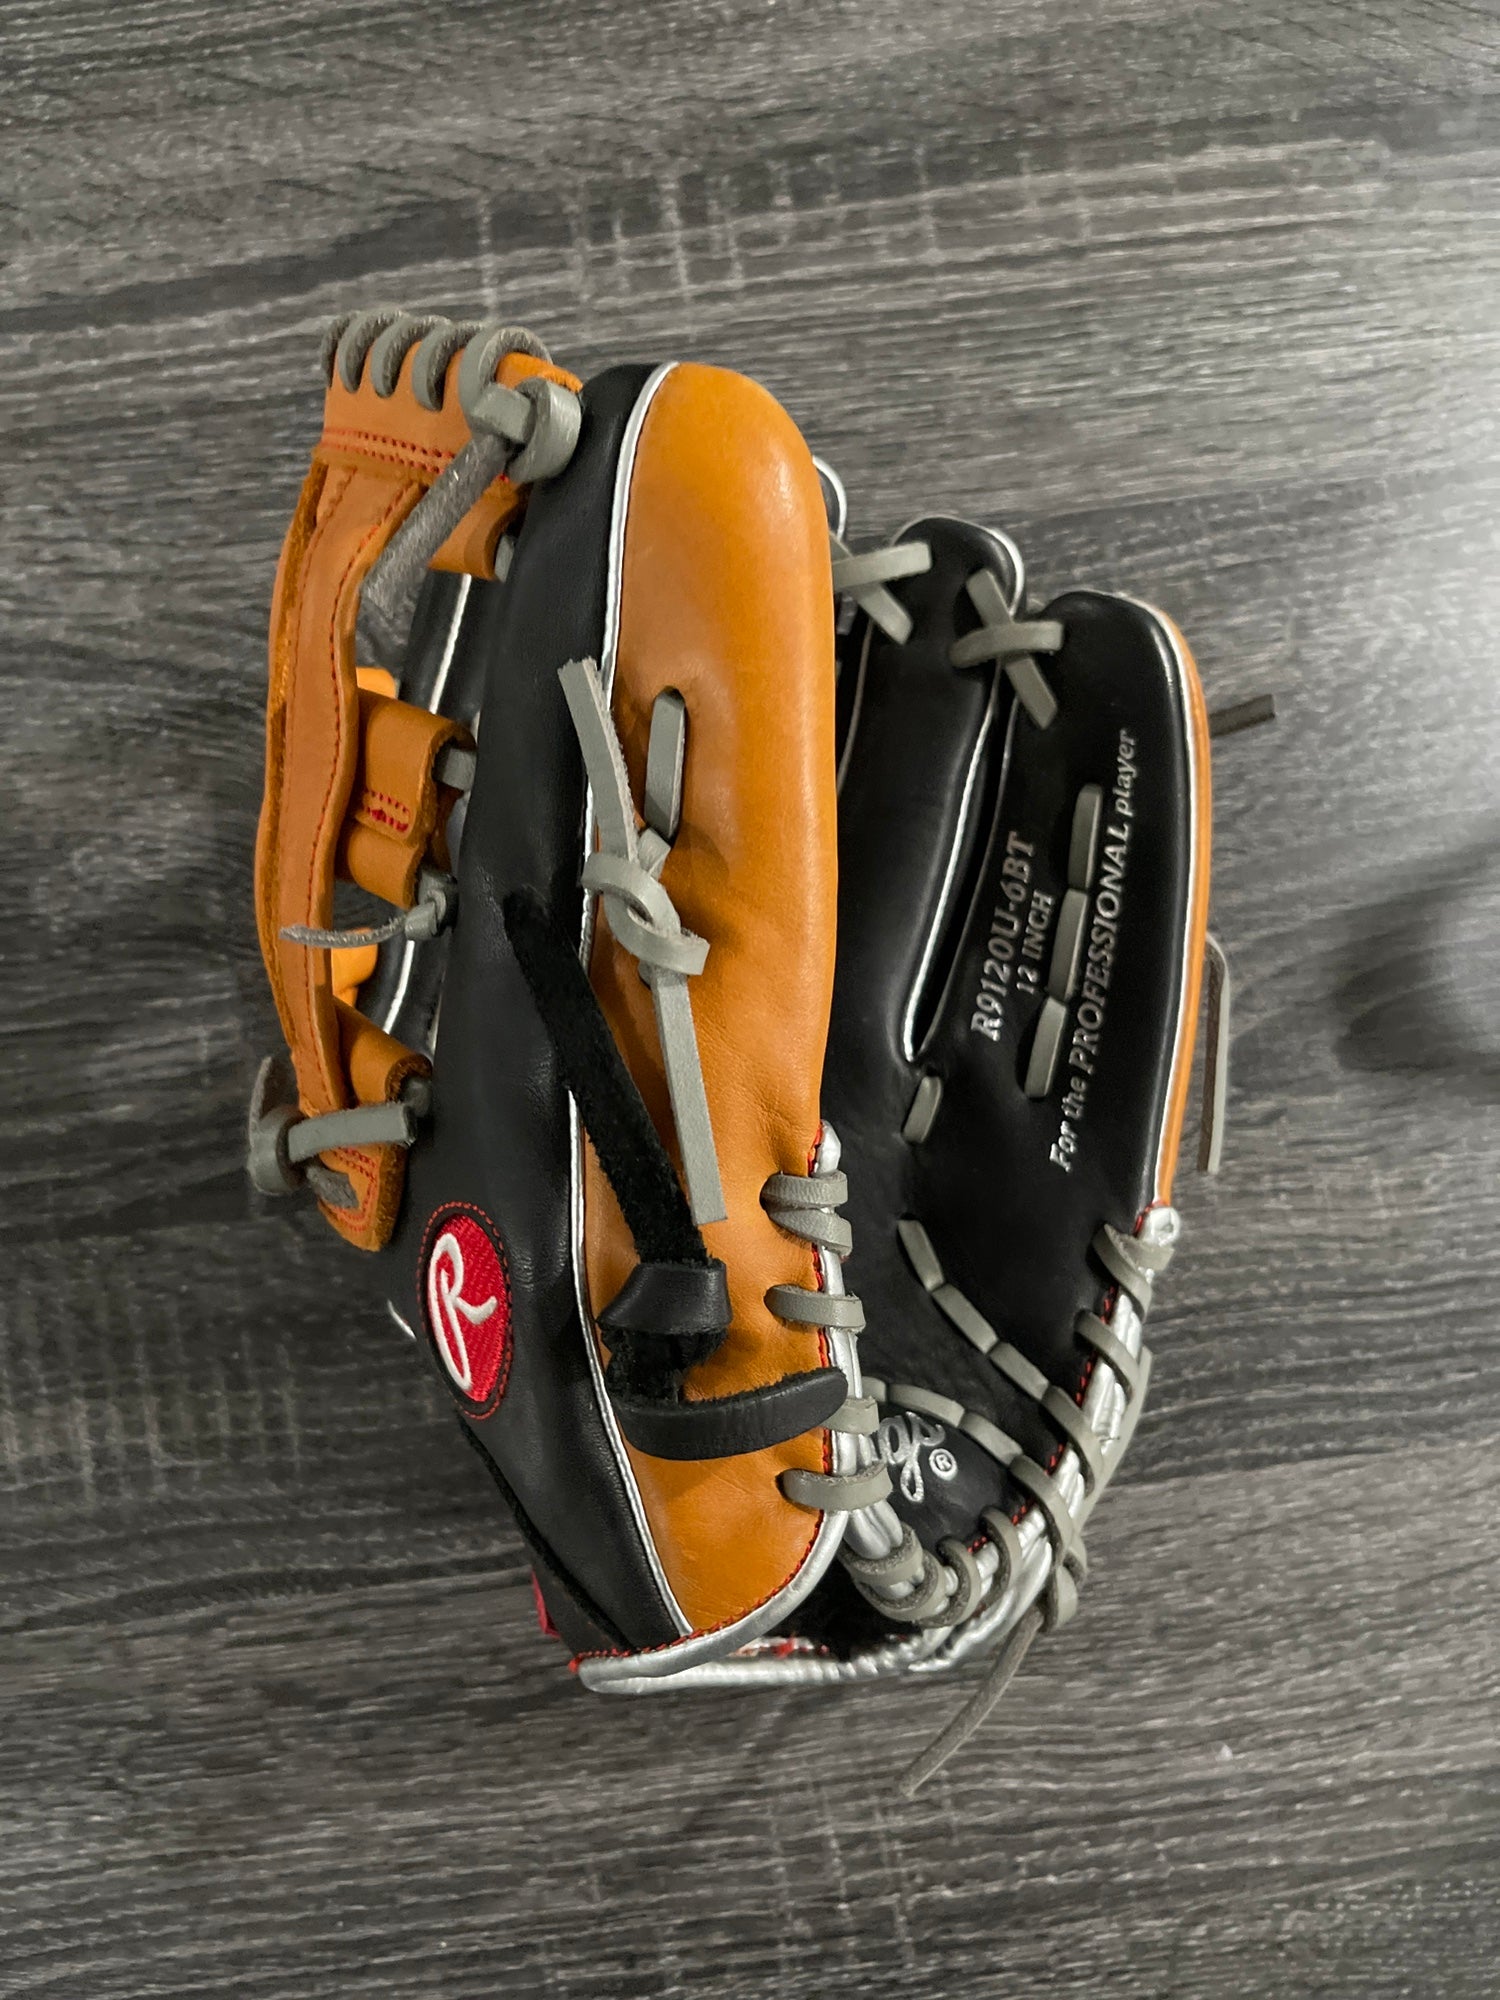 Rawlings R9 Pro Nolan Arenado Model Baseball Glove